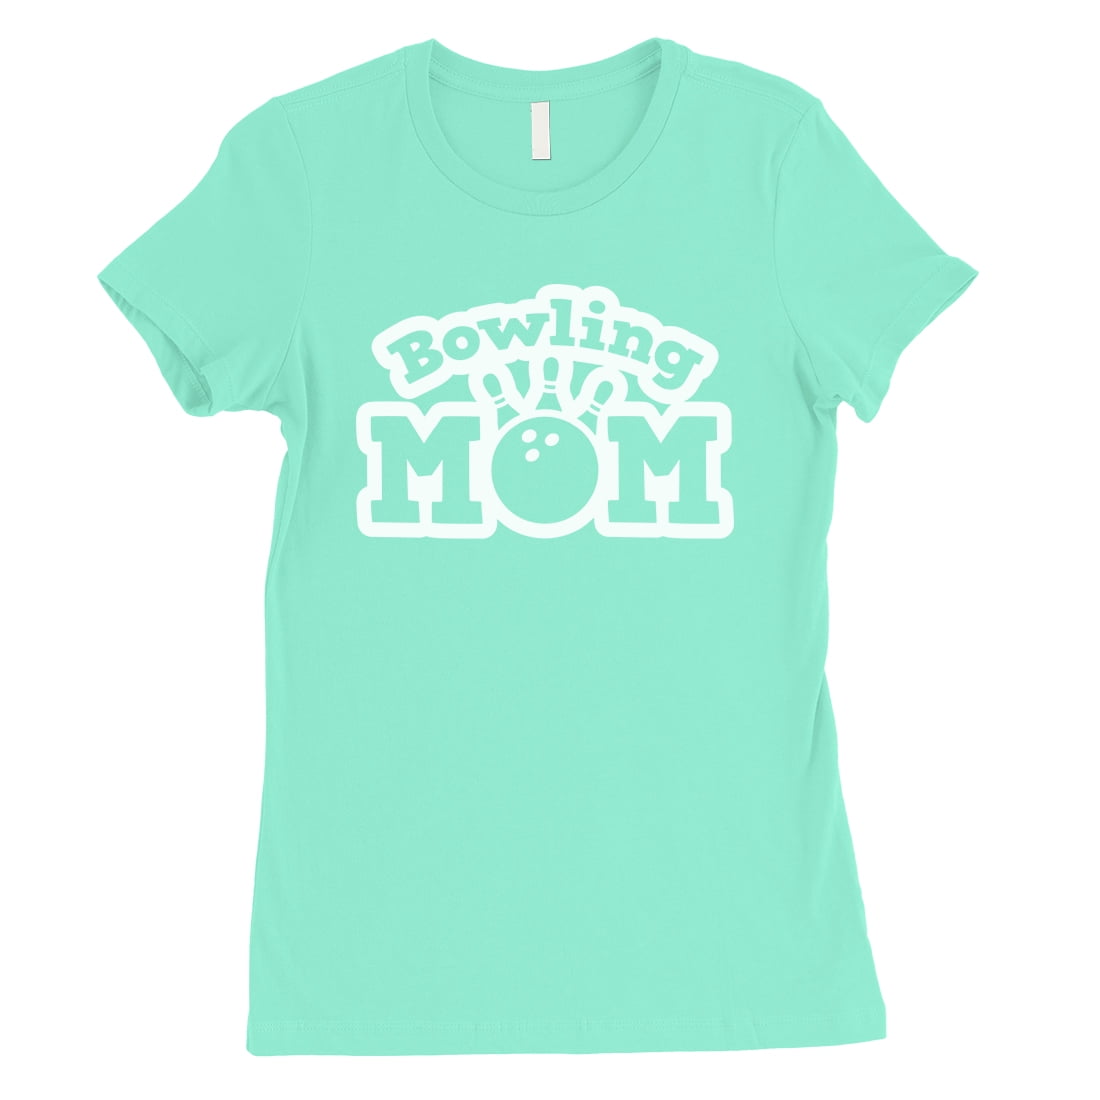 Novelty Shirt Gift For Her Humor Shirt Funny Shirt Cactus Tee Mom Shirts Funny Quotes Shirt Sarcastic Shirt Don't Be A Prick Shirt